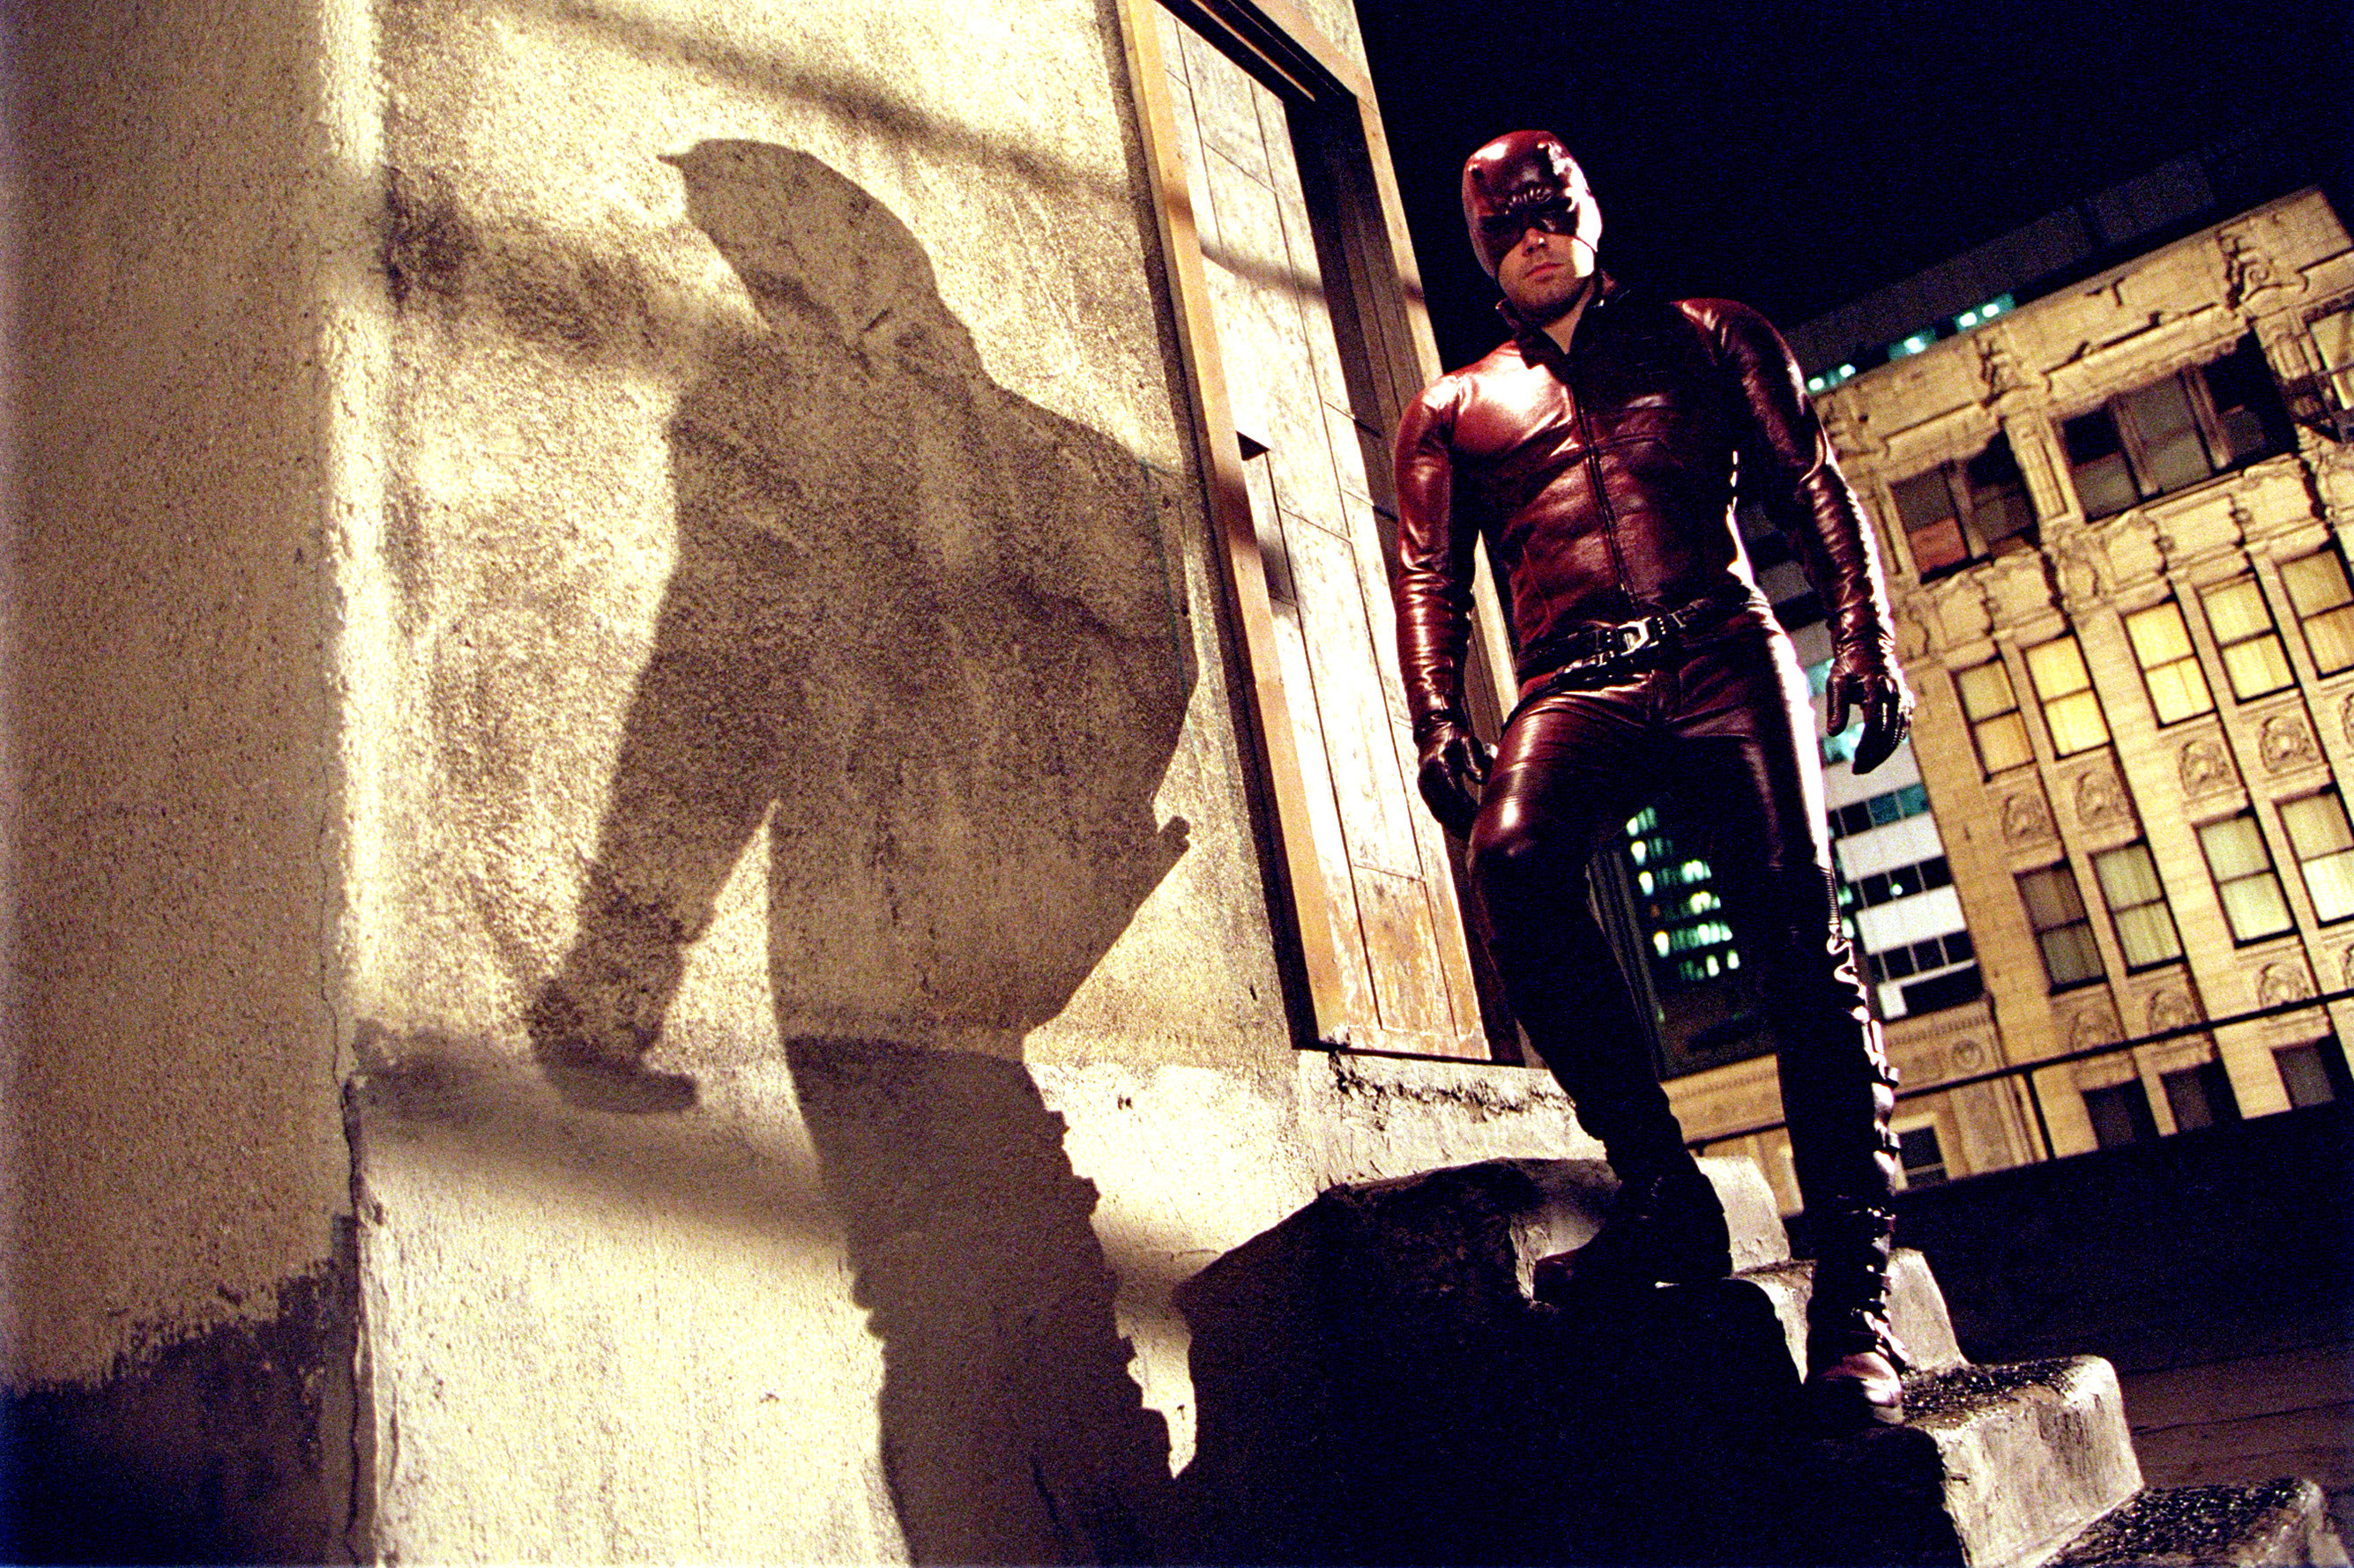 Affleck in costume as Daredevil in a scene from the movie